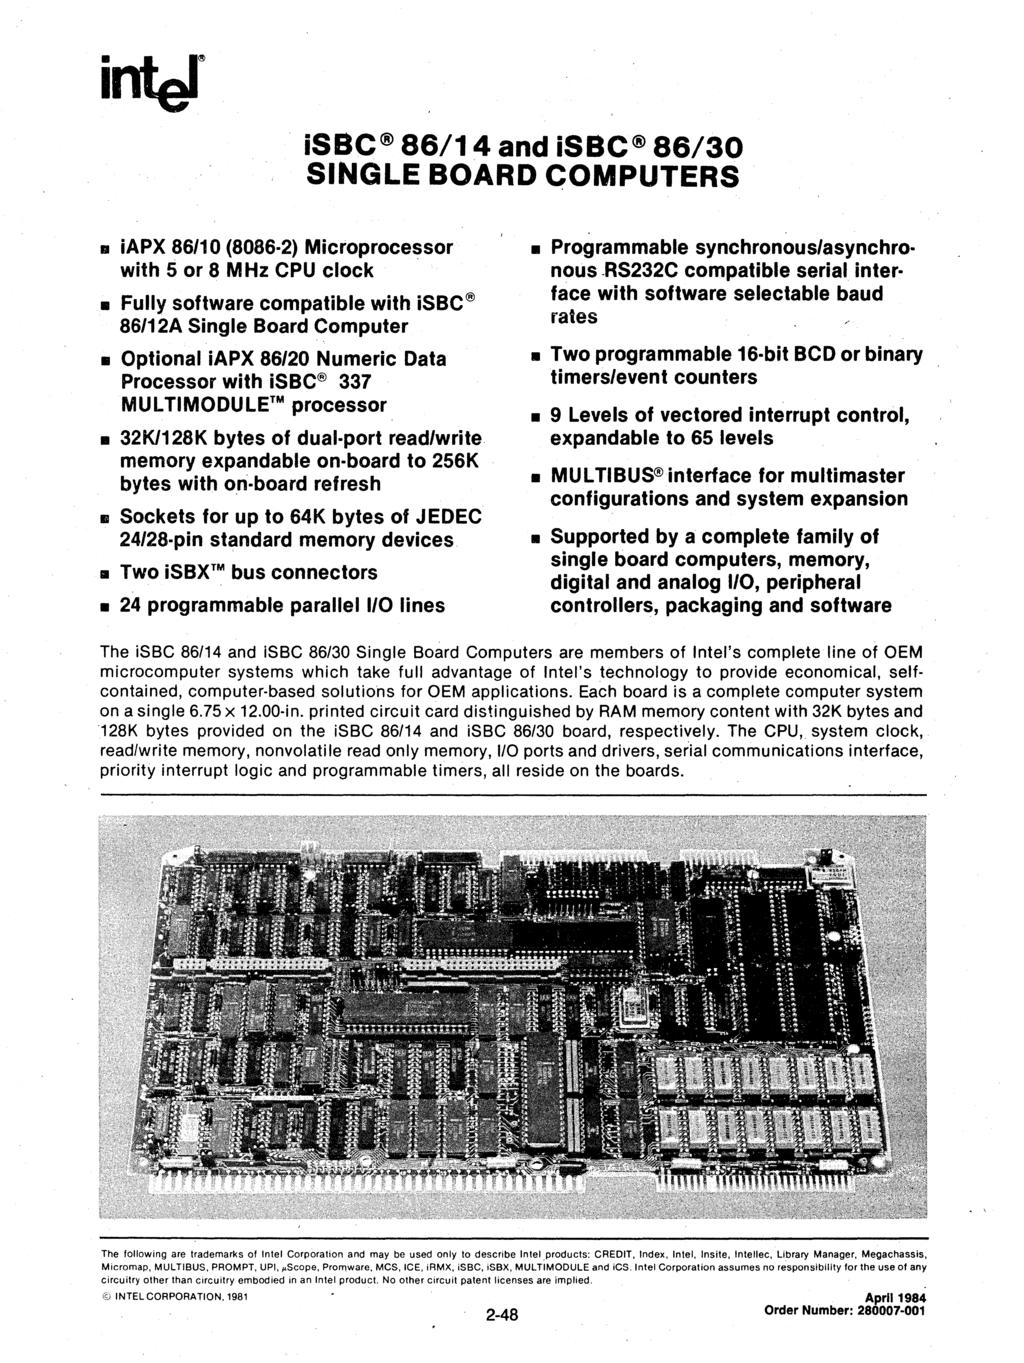 isbc 86/14 and isbc 86/30 SINGLE BOARD COMPUTERS II iapx 86/10 (8086-2) Microprocessor with 5 or 8 MHz CPU clock II Fully software compatible with isbc 86112A Single Board Computer II Optional iapx